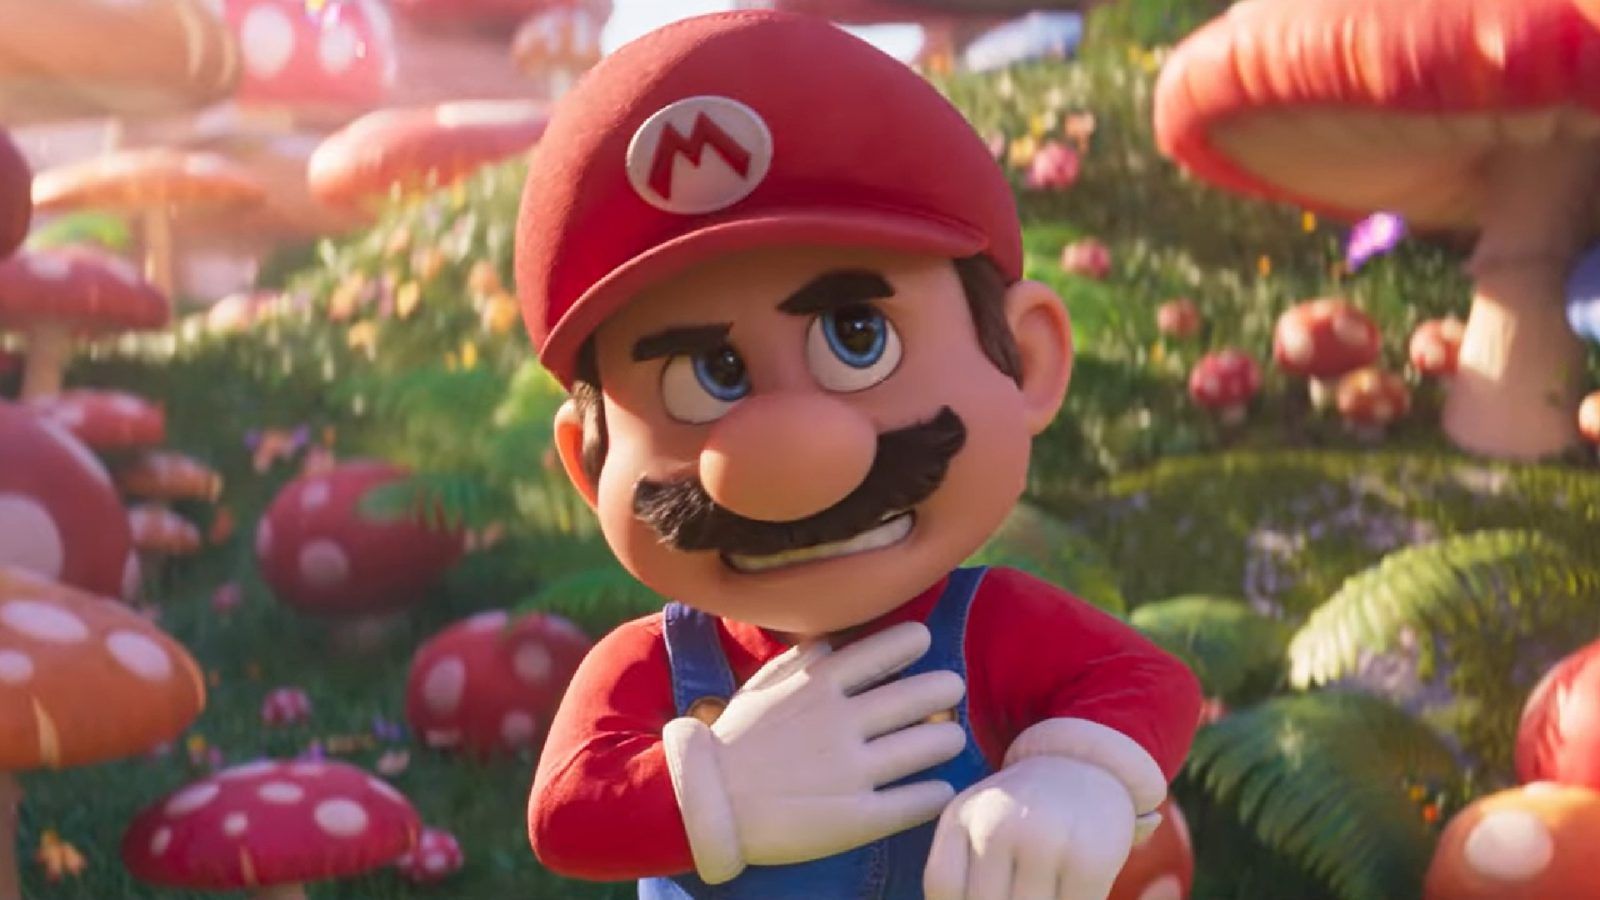 The Super Mario Bros.' first trailer promises more adventures from Mario